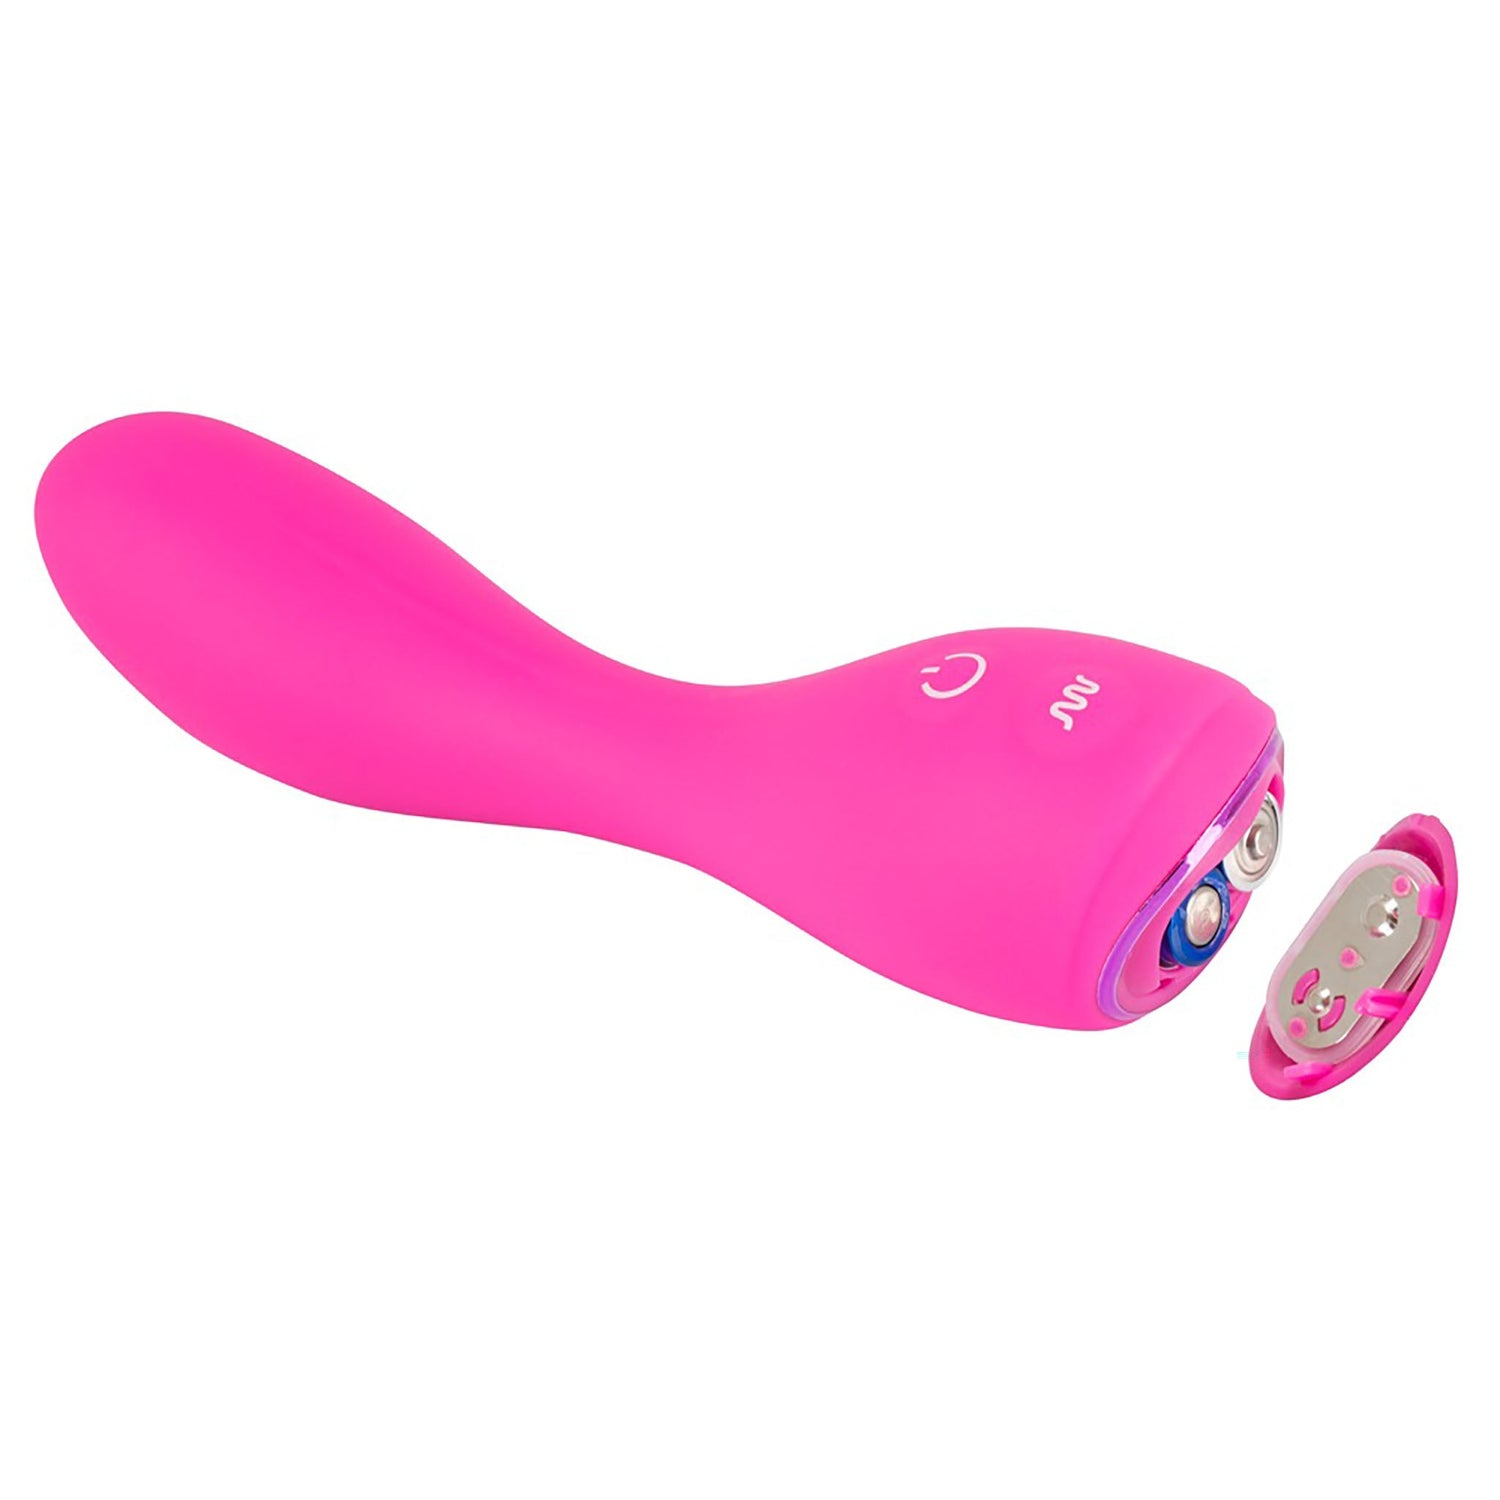 G-Spot Vibrator in pink von Sweet Smile, verpackungsbeilage